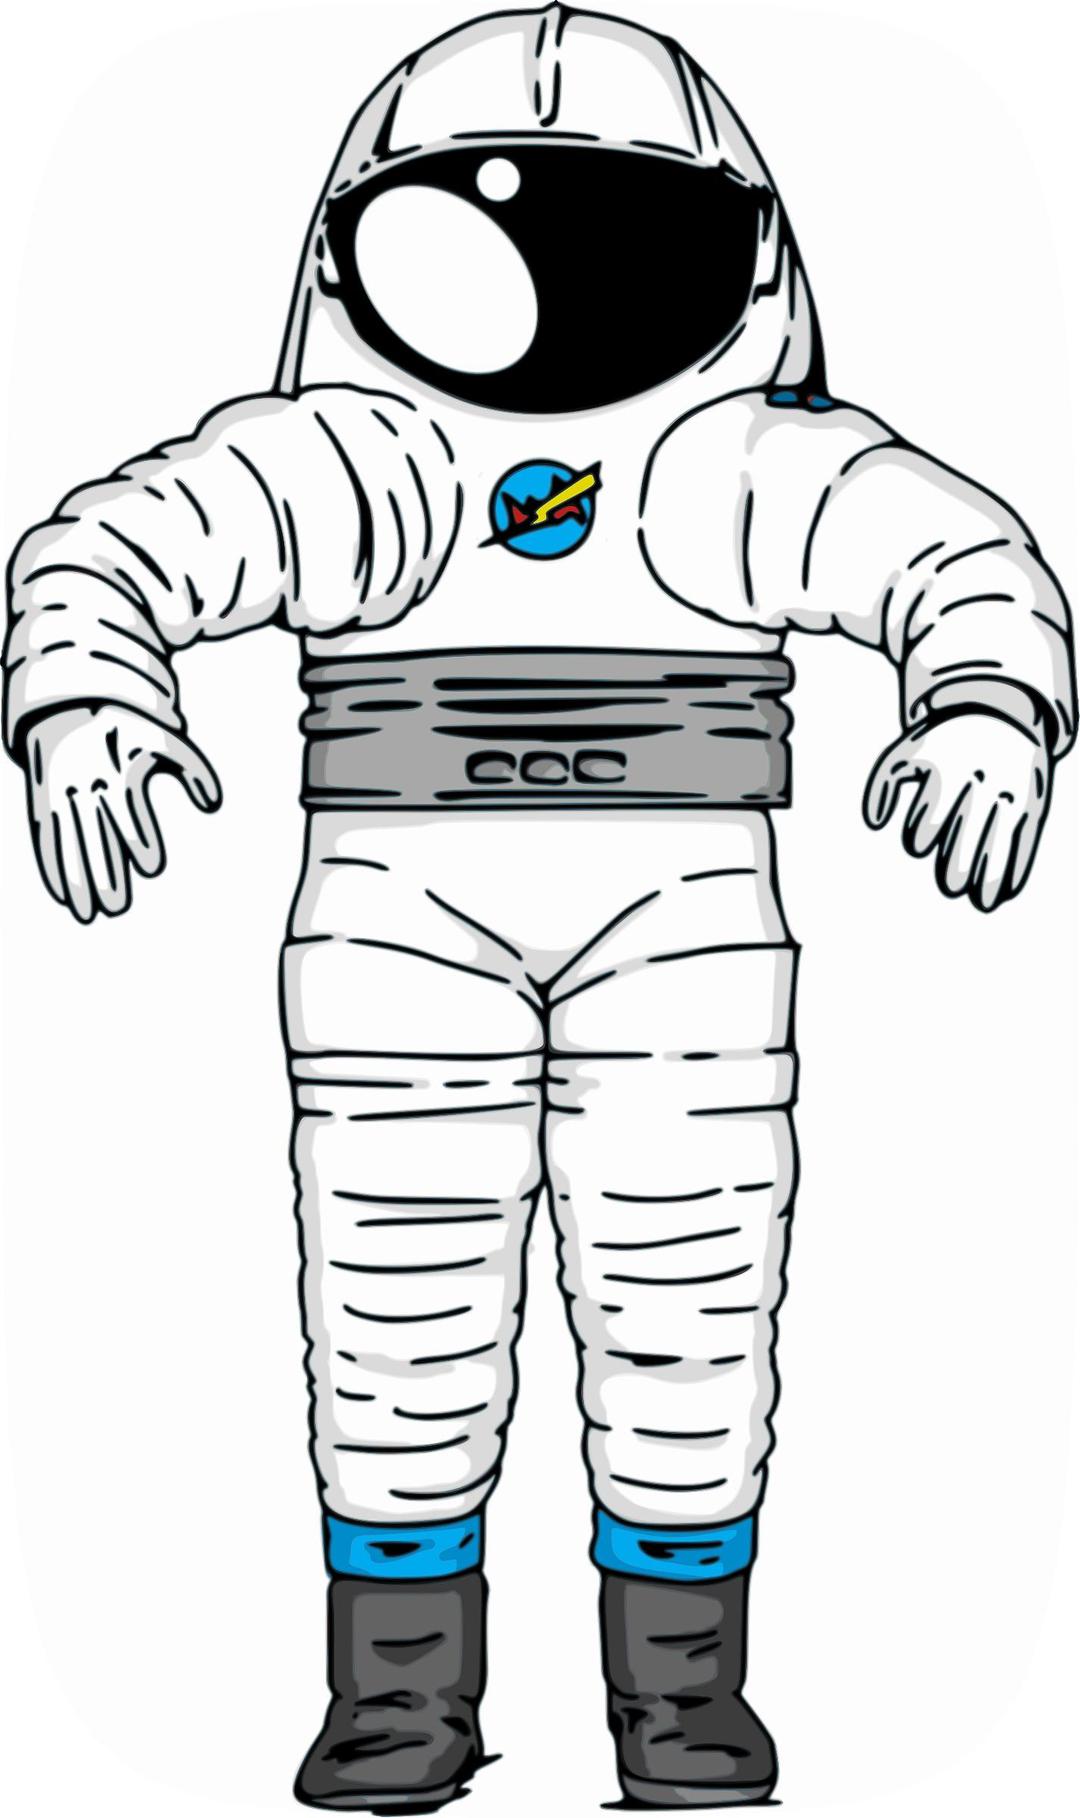 NASA Mark III Astronaut Space Suit png transparent